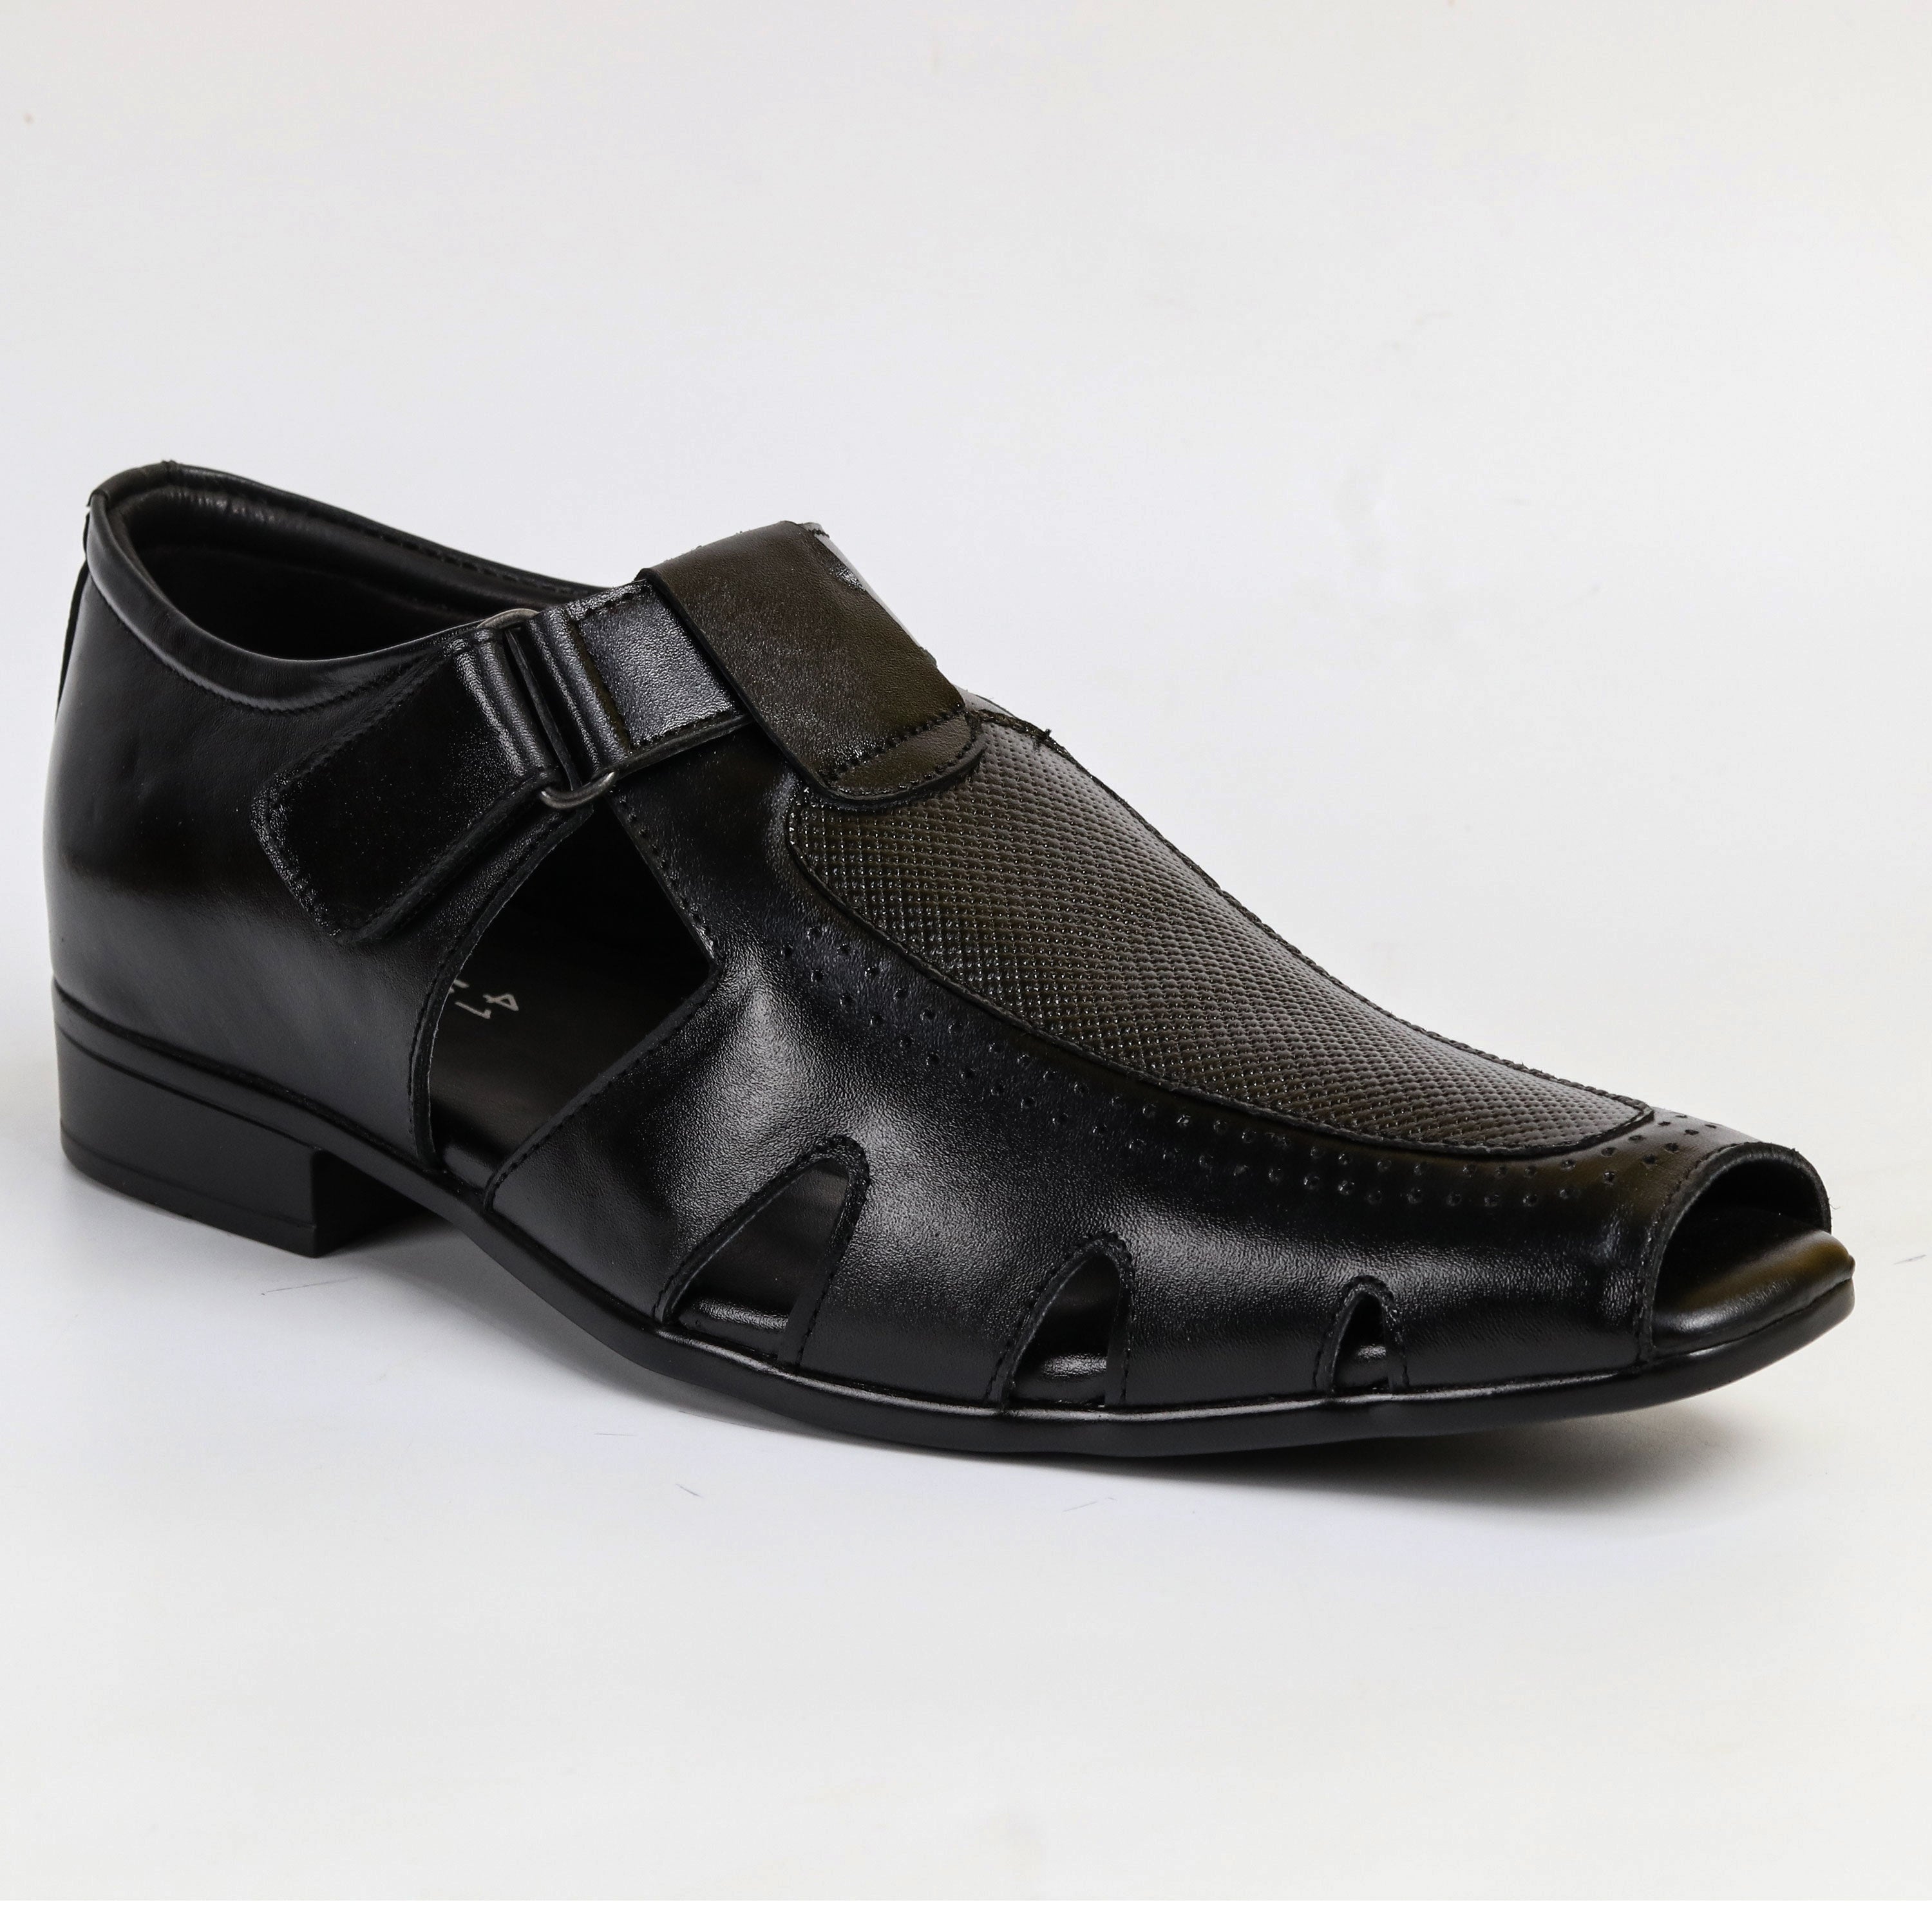 Zays Leather Premium Close Sandal For Men (Black) - ZAYSSF07